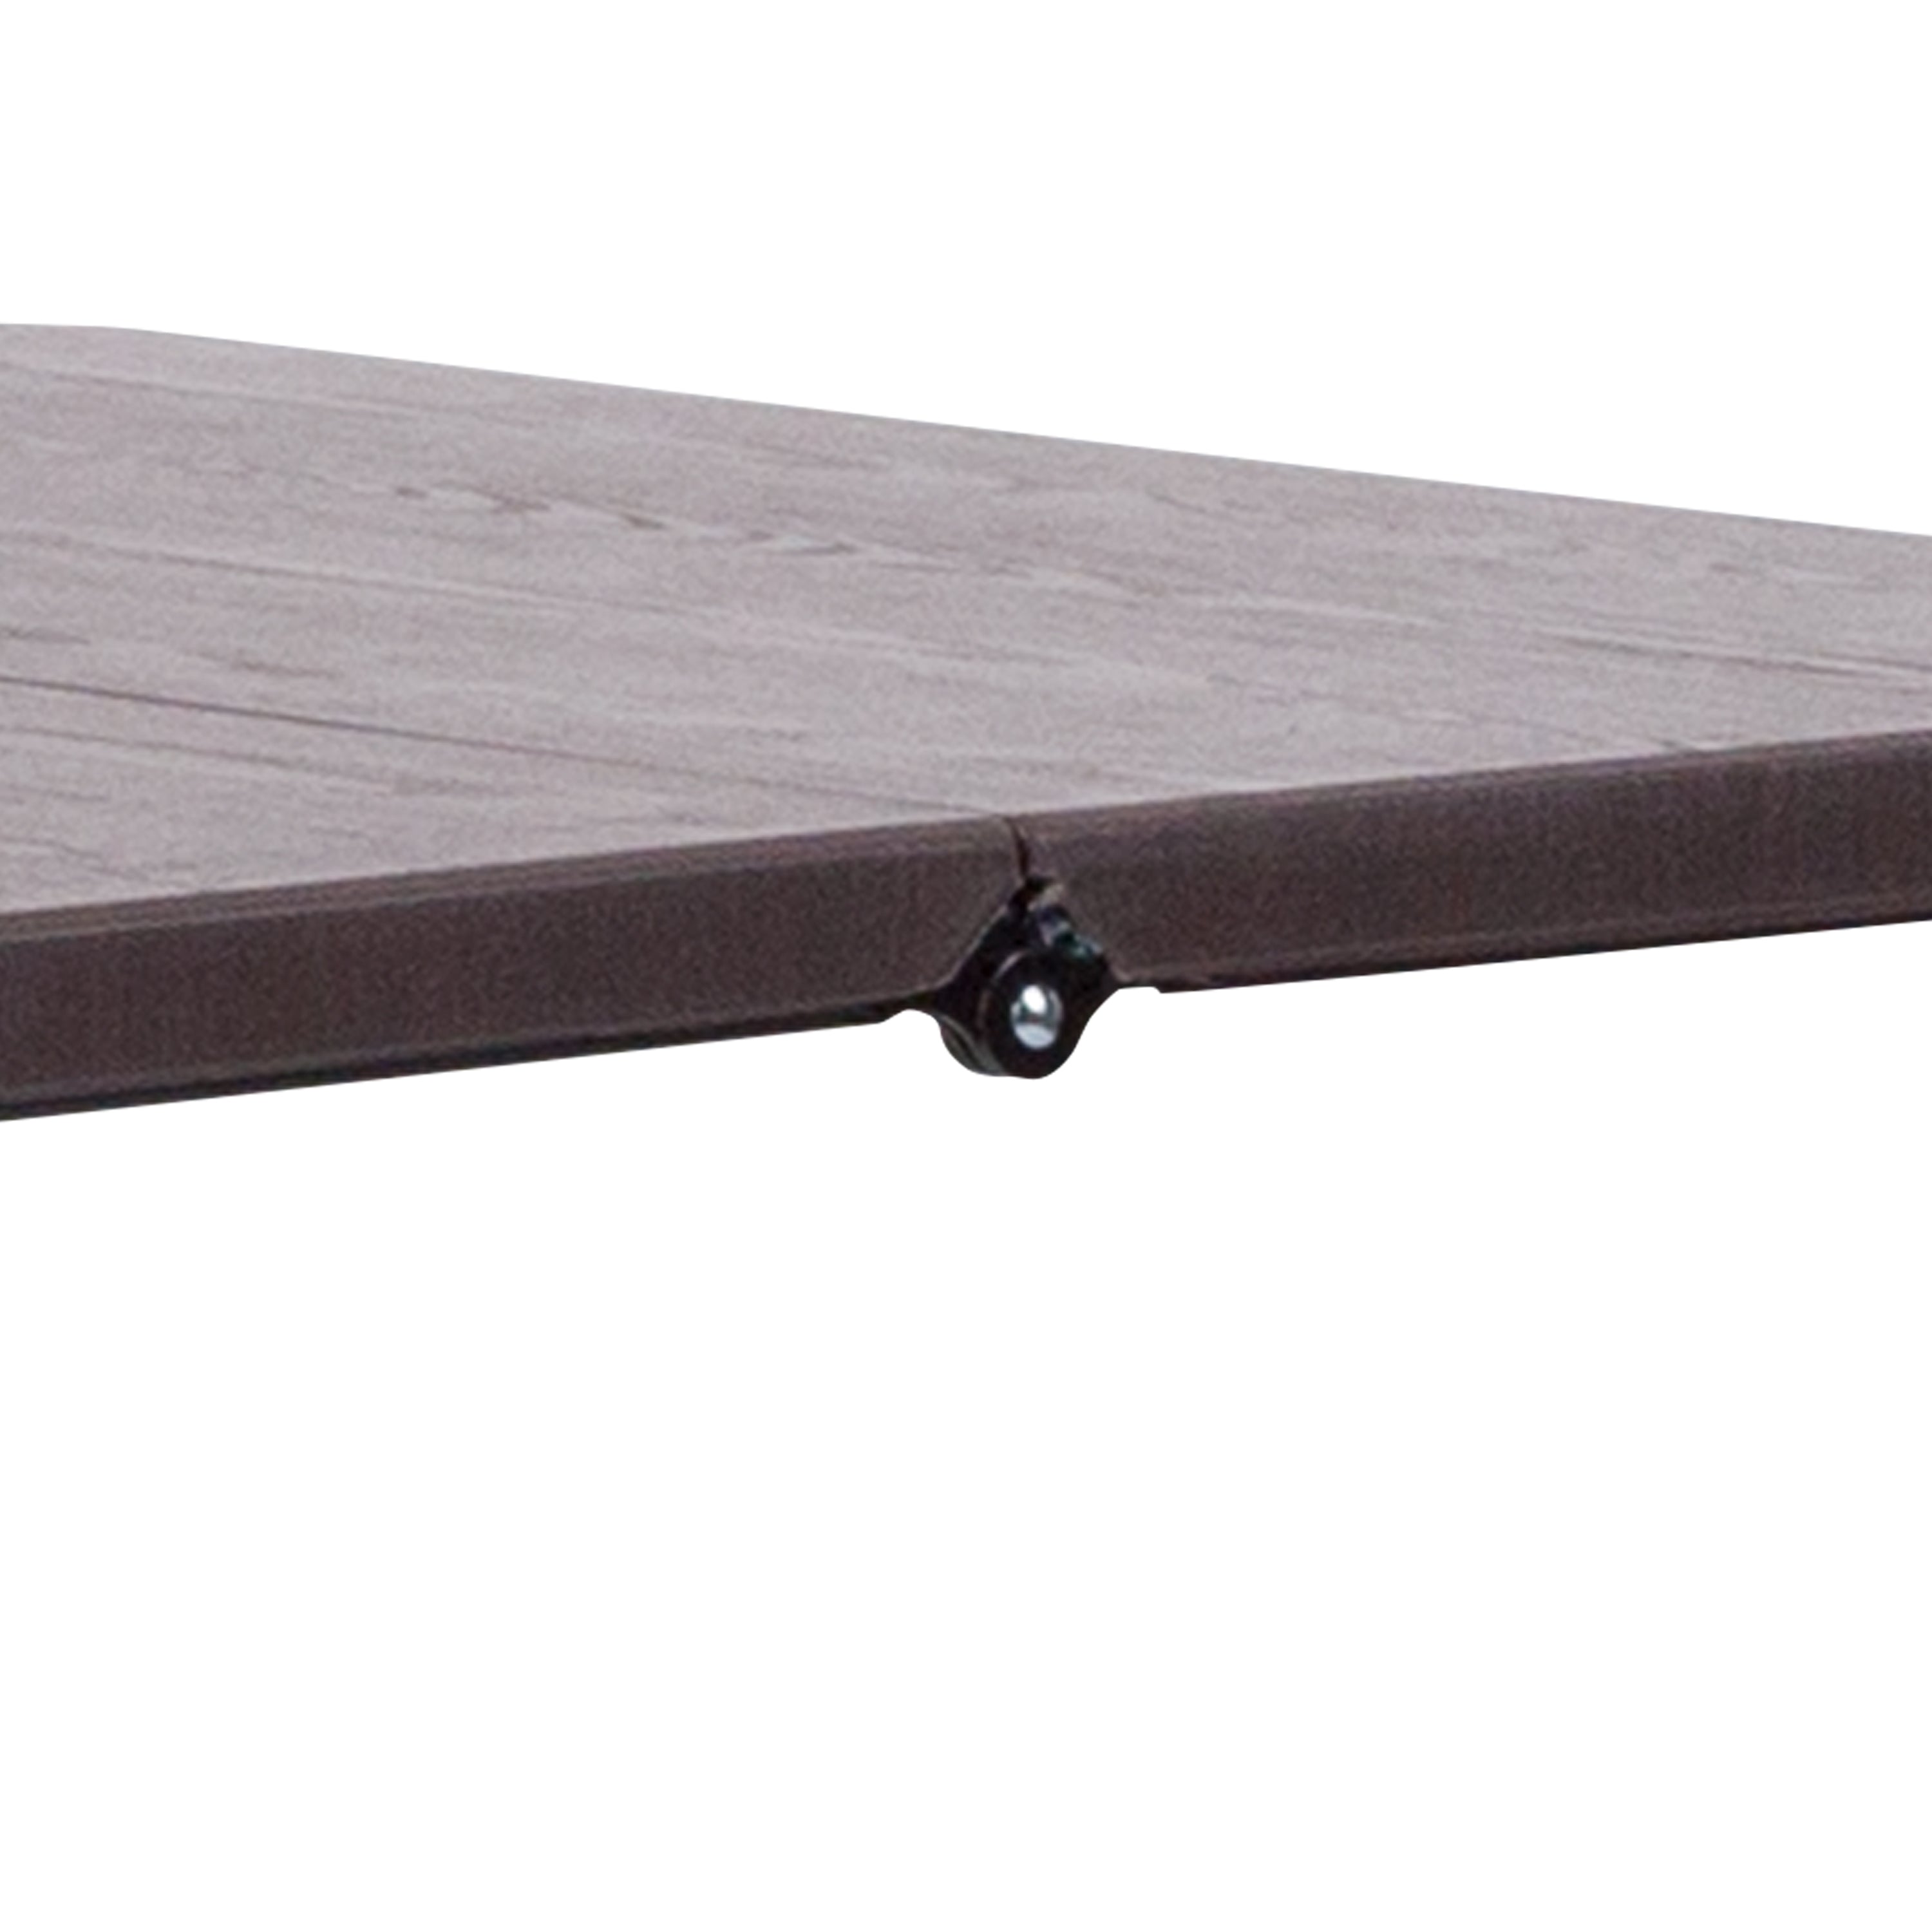 2.83-Foot Square Bi-Fold Plastic Folding Table with Carrying Handle-Square Plastic Folding Table-Flash Furniture-Wall2Wall Furnishings